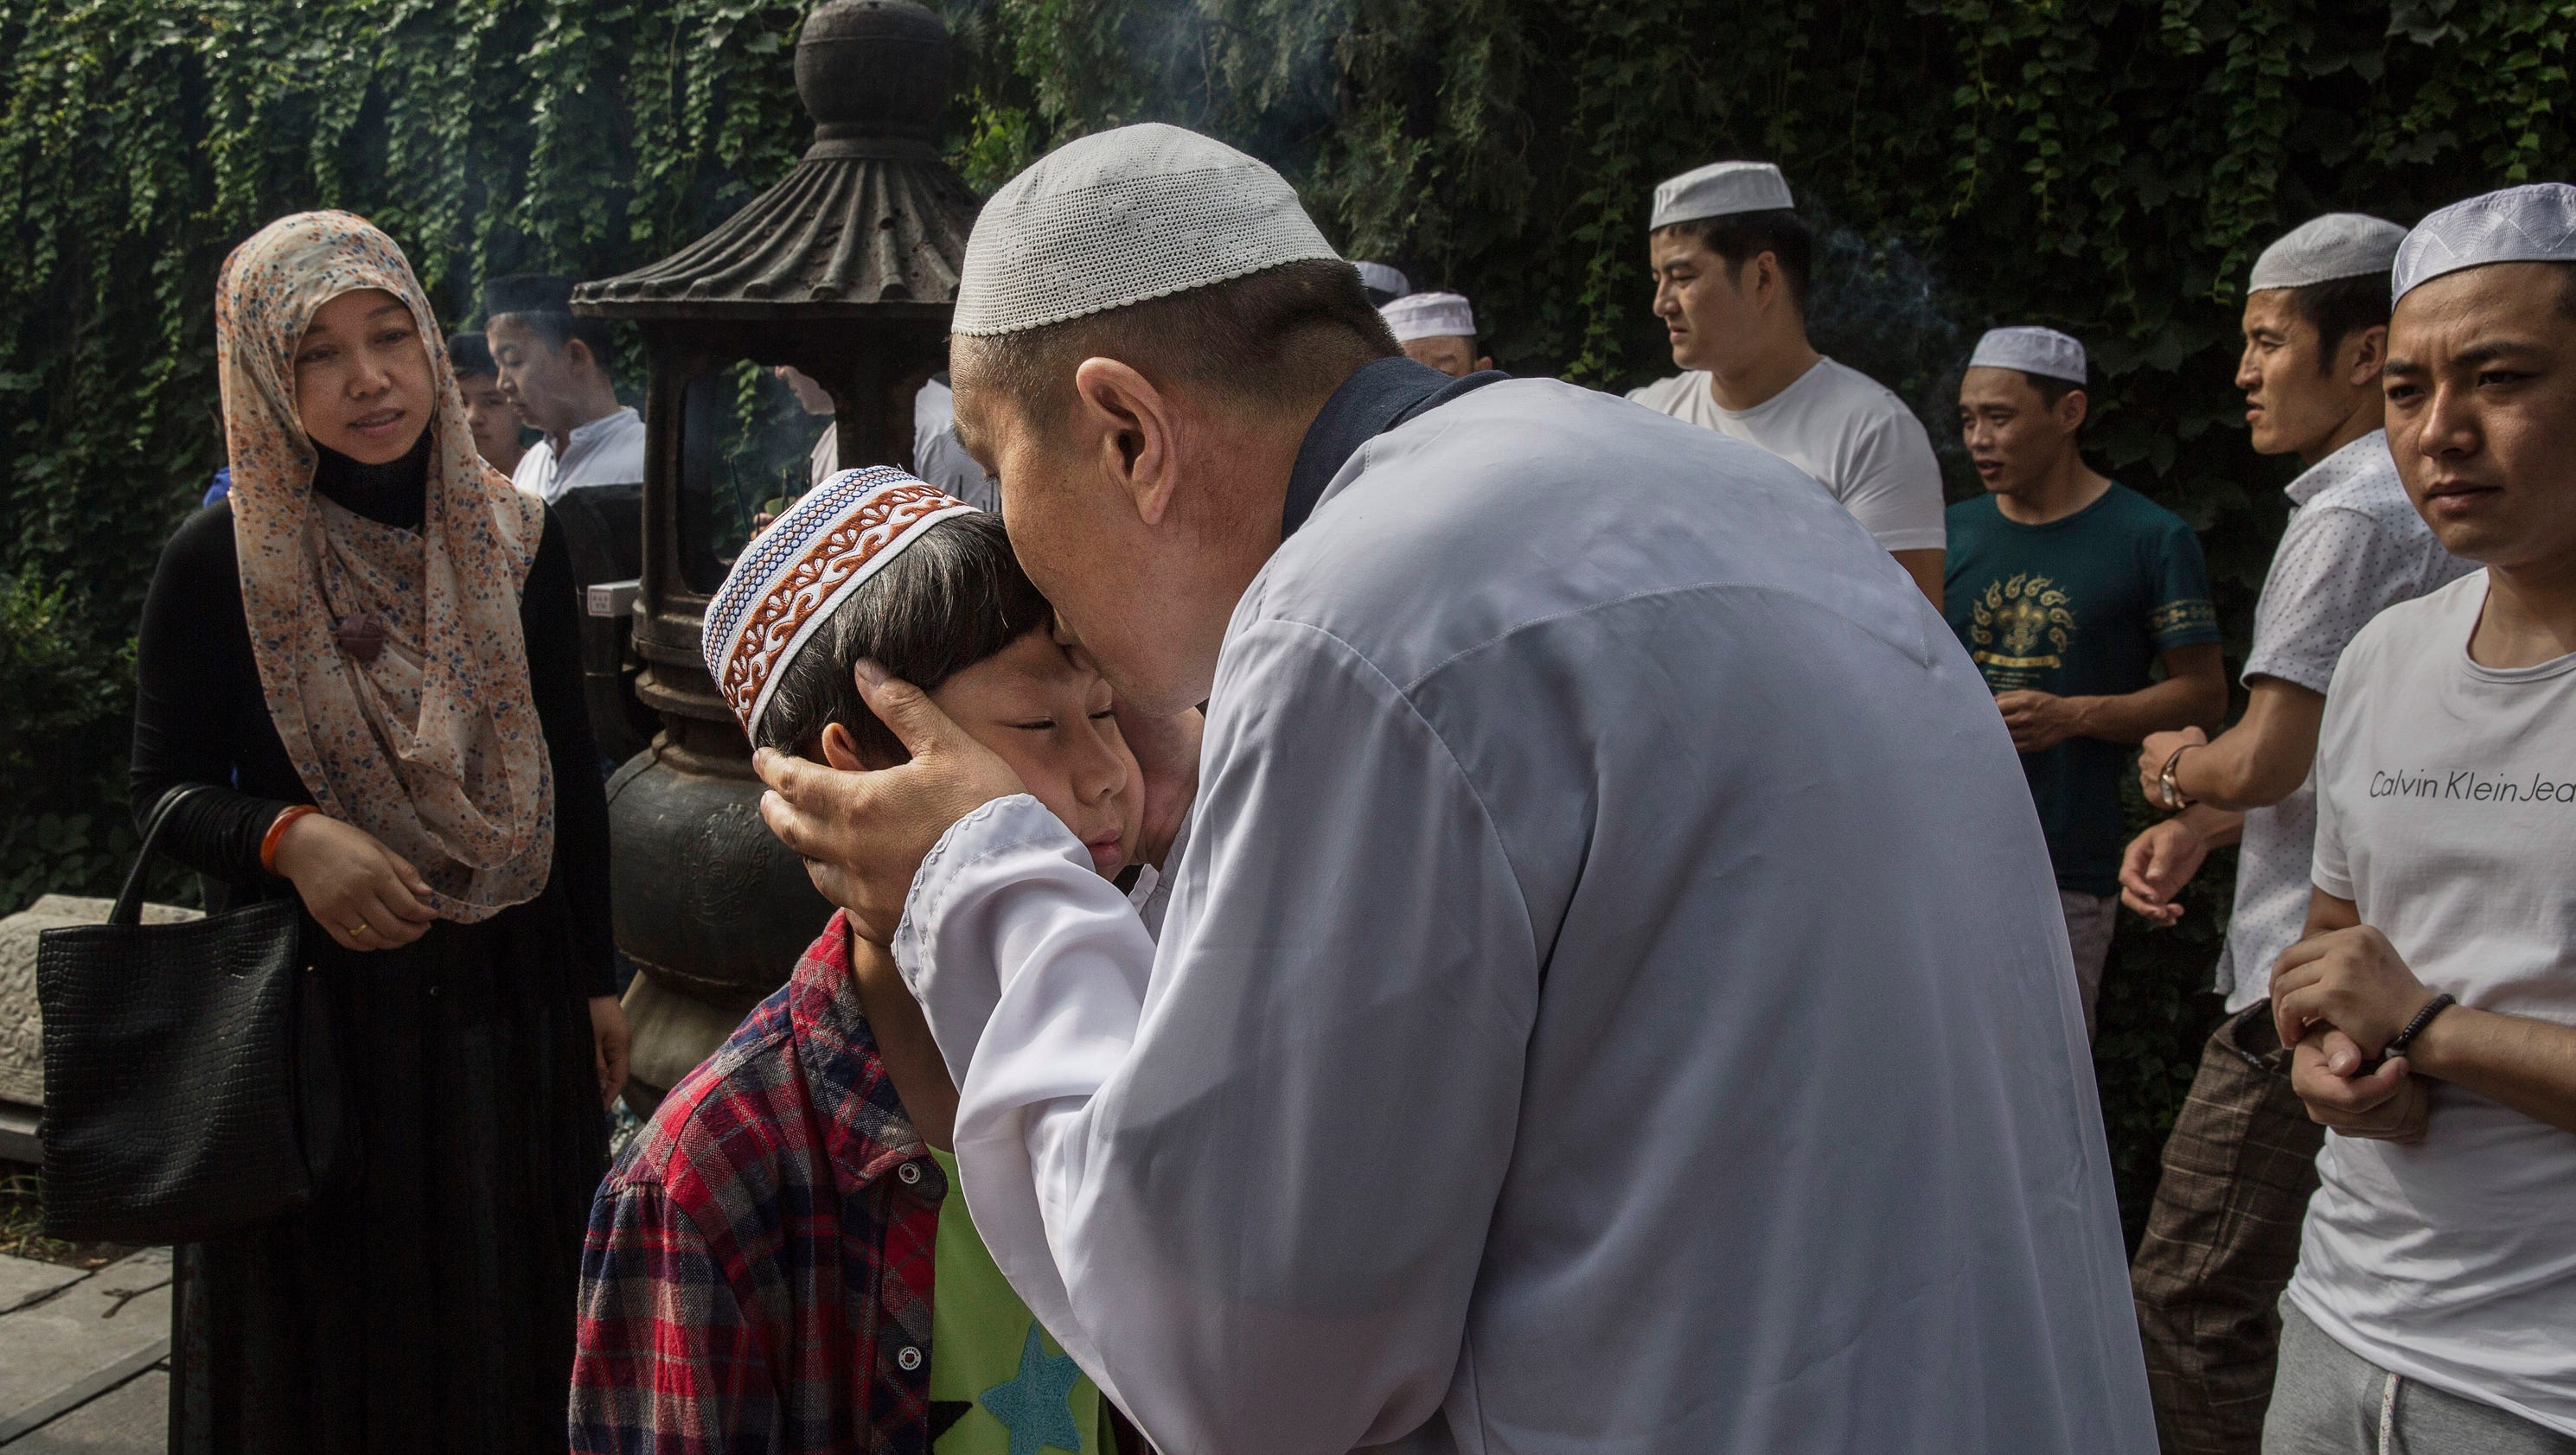 Muslims around the world celebrate Eid al-Fitr